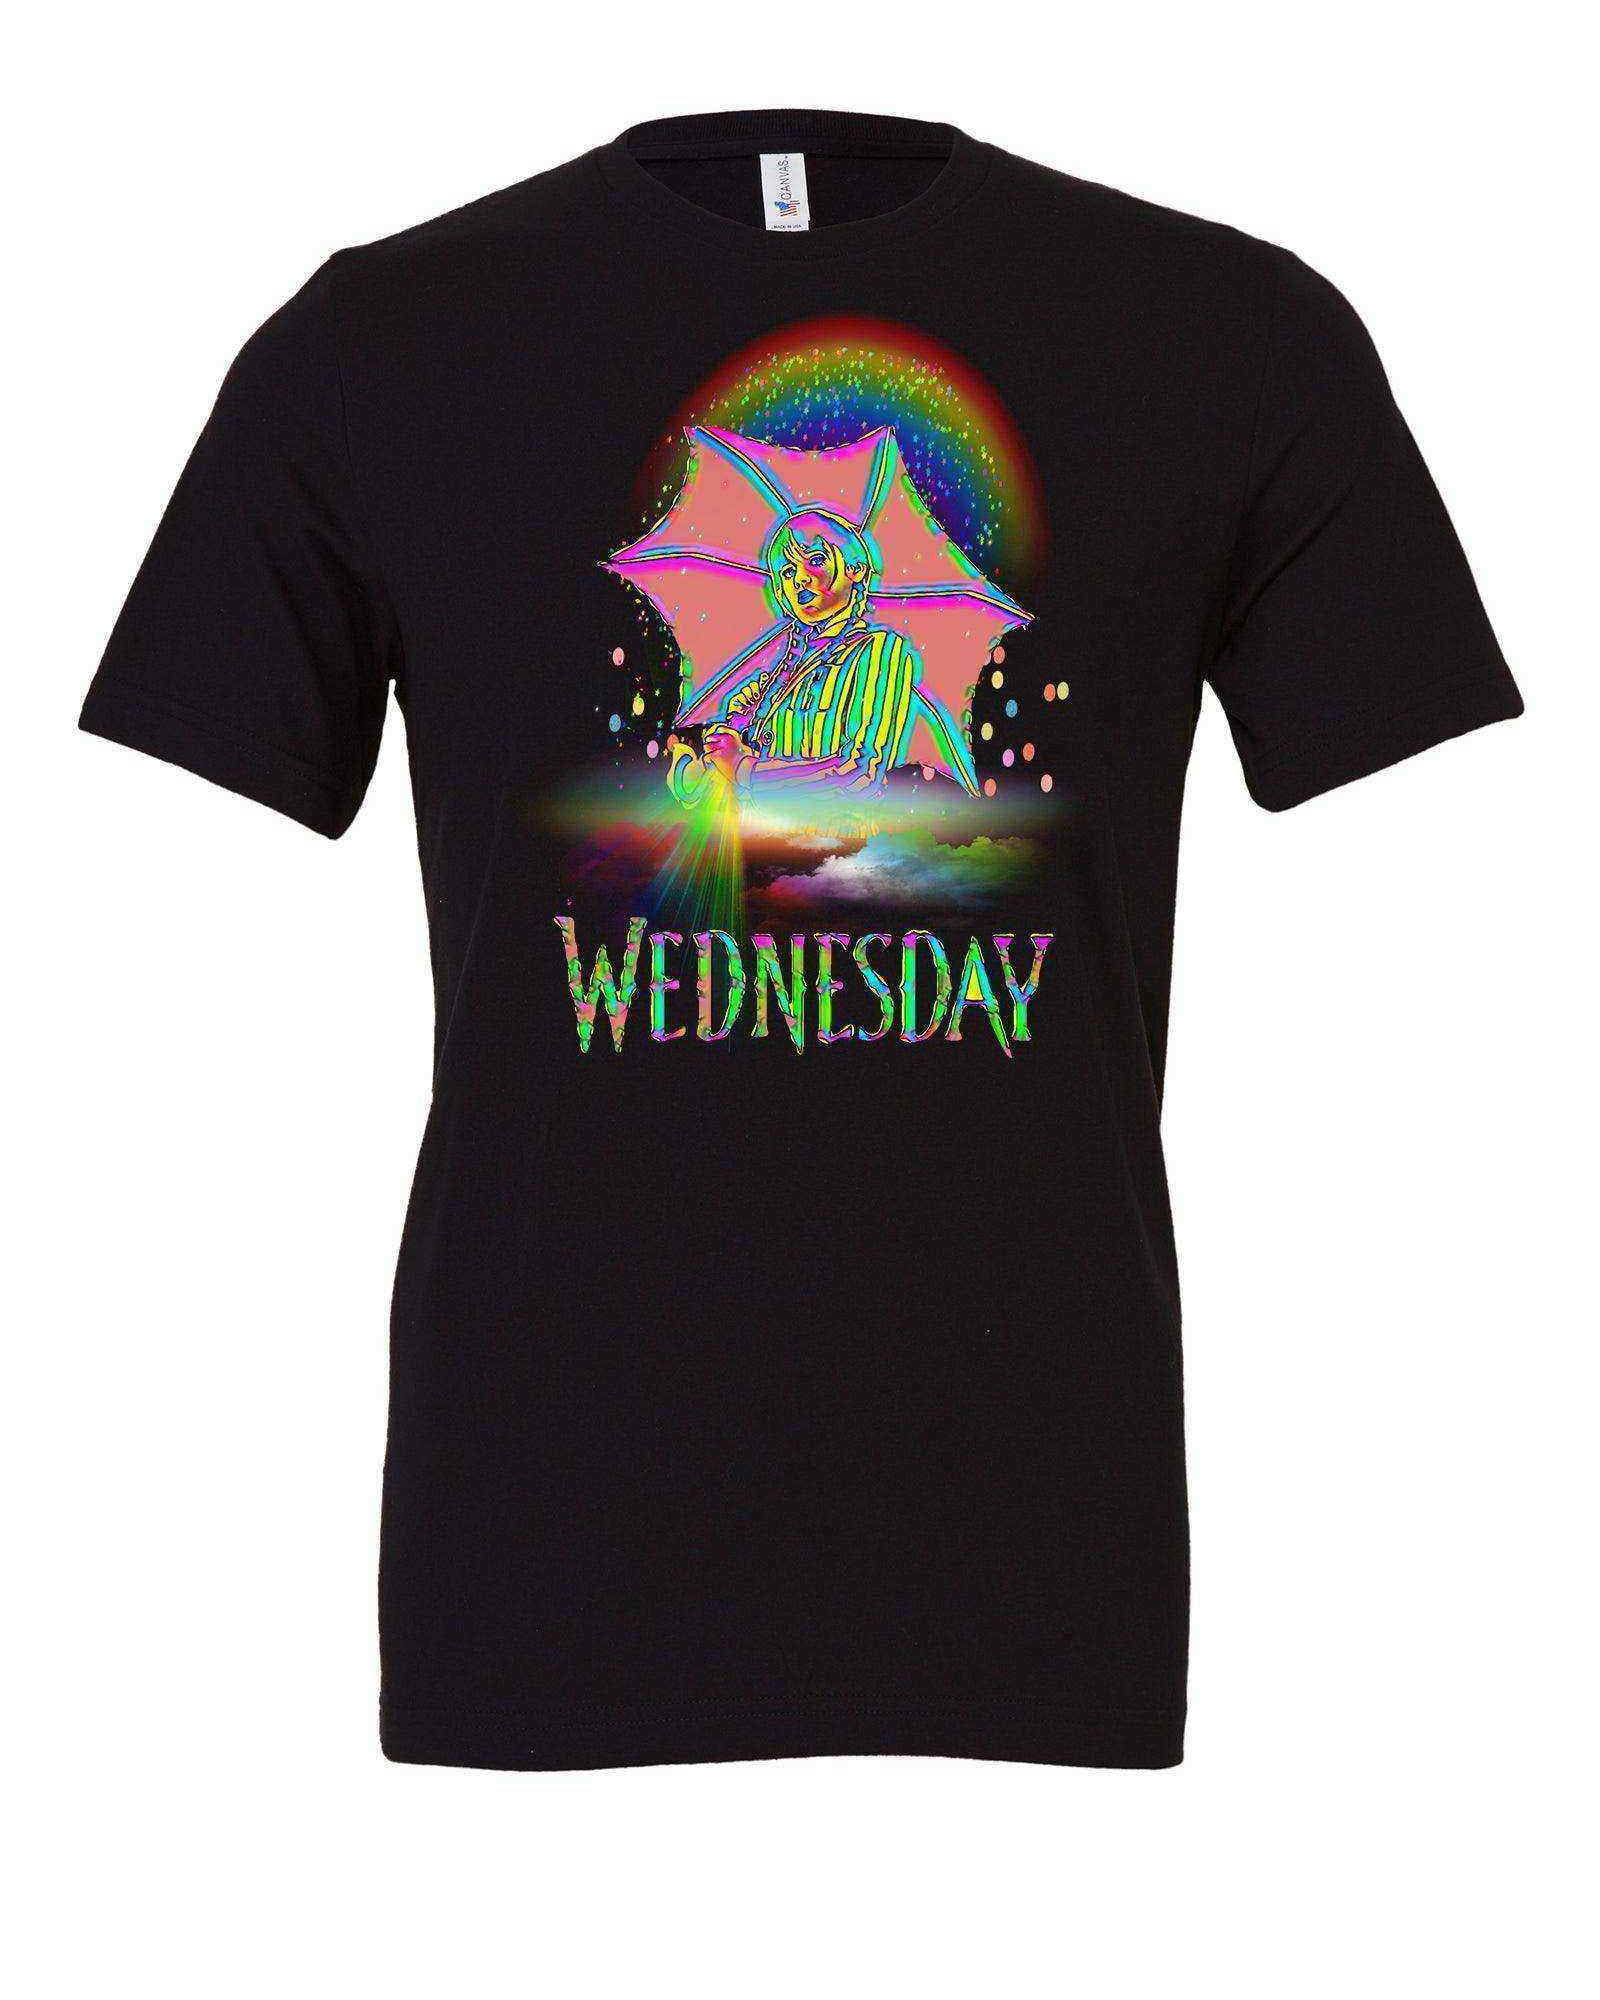 Toddler | Bright Wednesday Shirt | Umbrella Girl Shirt | The Addams Shirt - Dylan's Tees